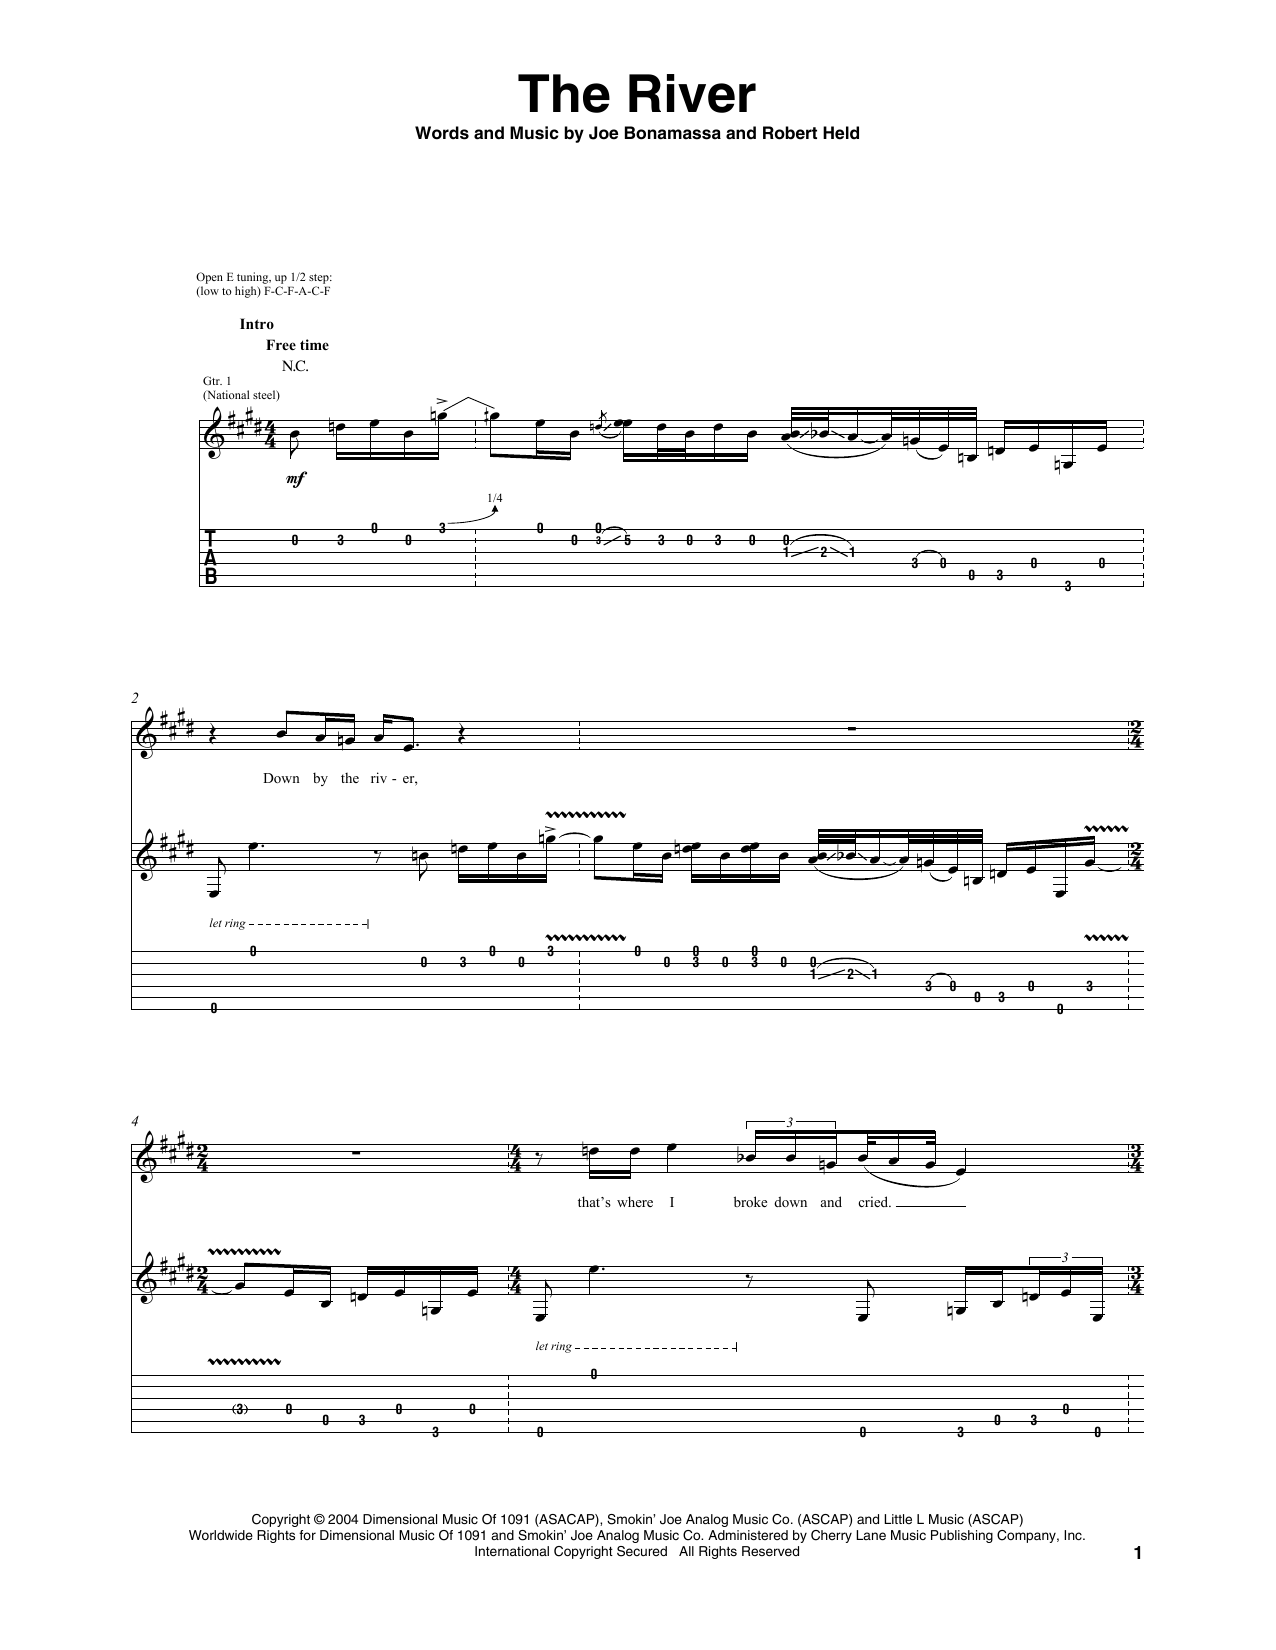 Joe Bonamassa The River Sheet Music Notes & Chords for Guitar Tab - Download or Print PDF